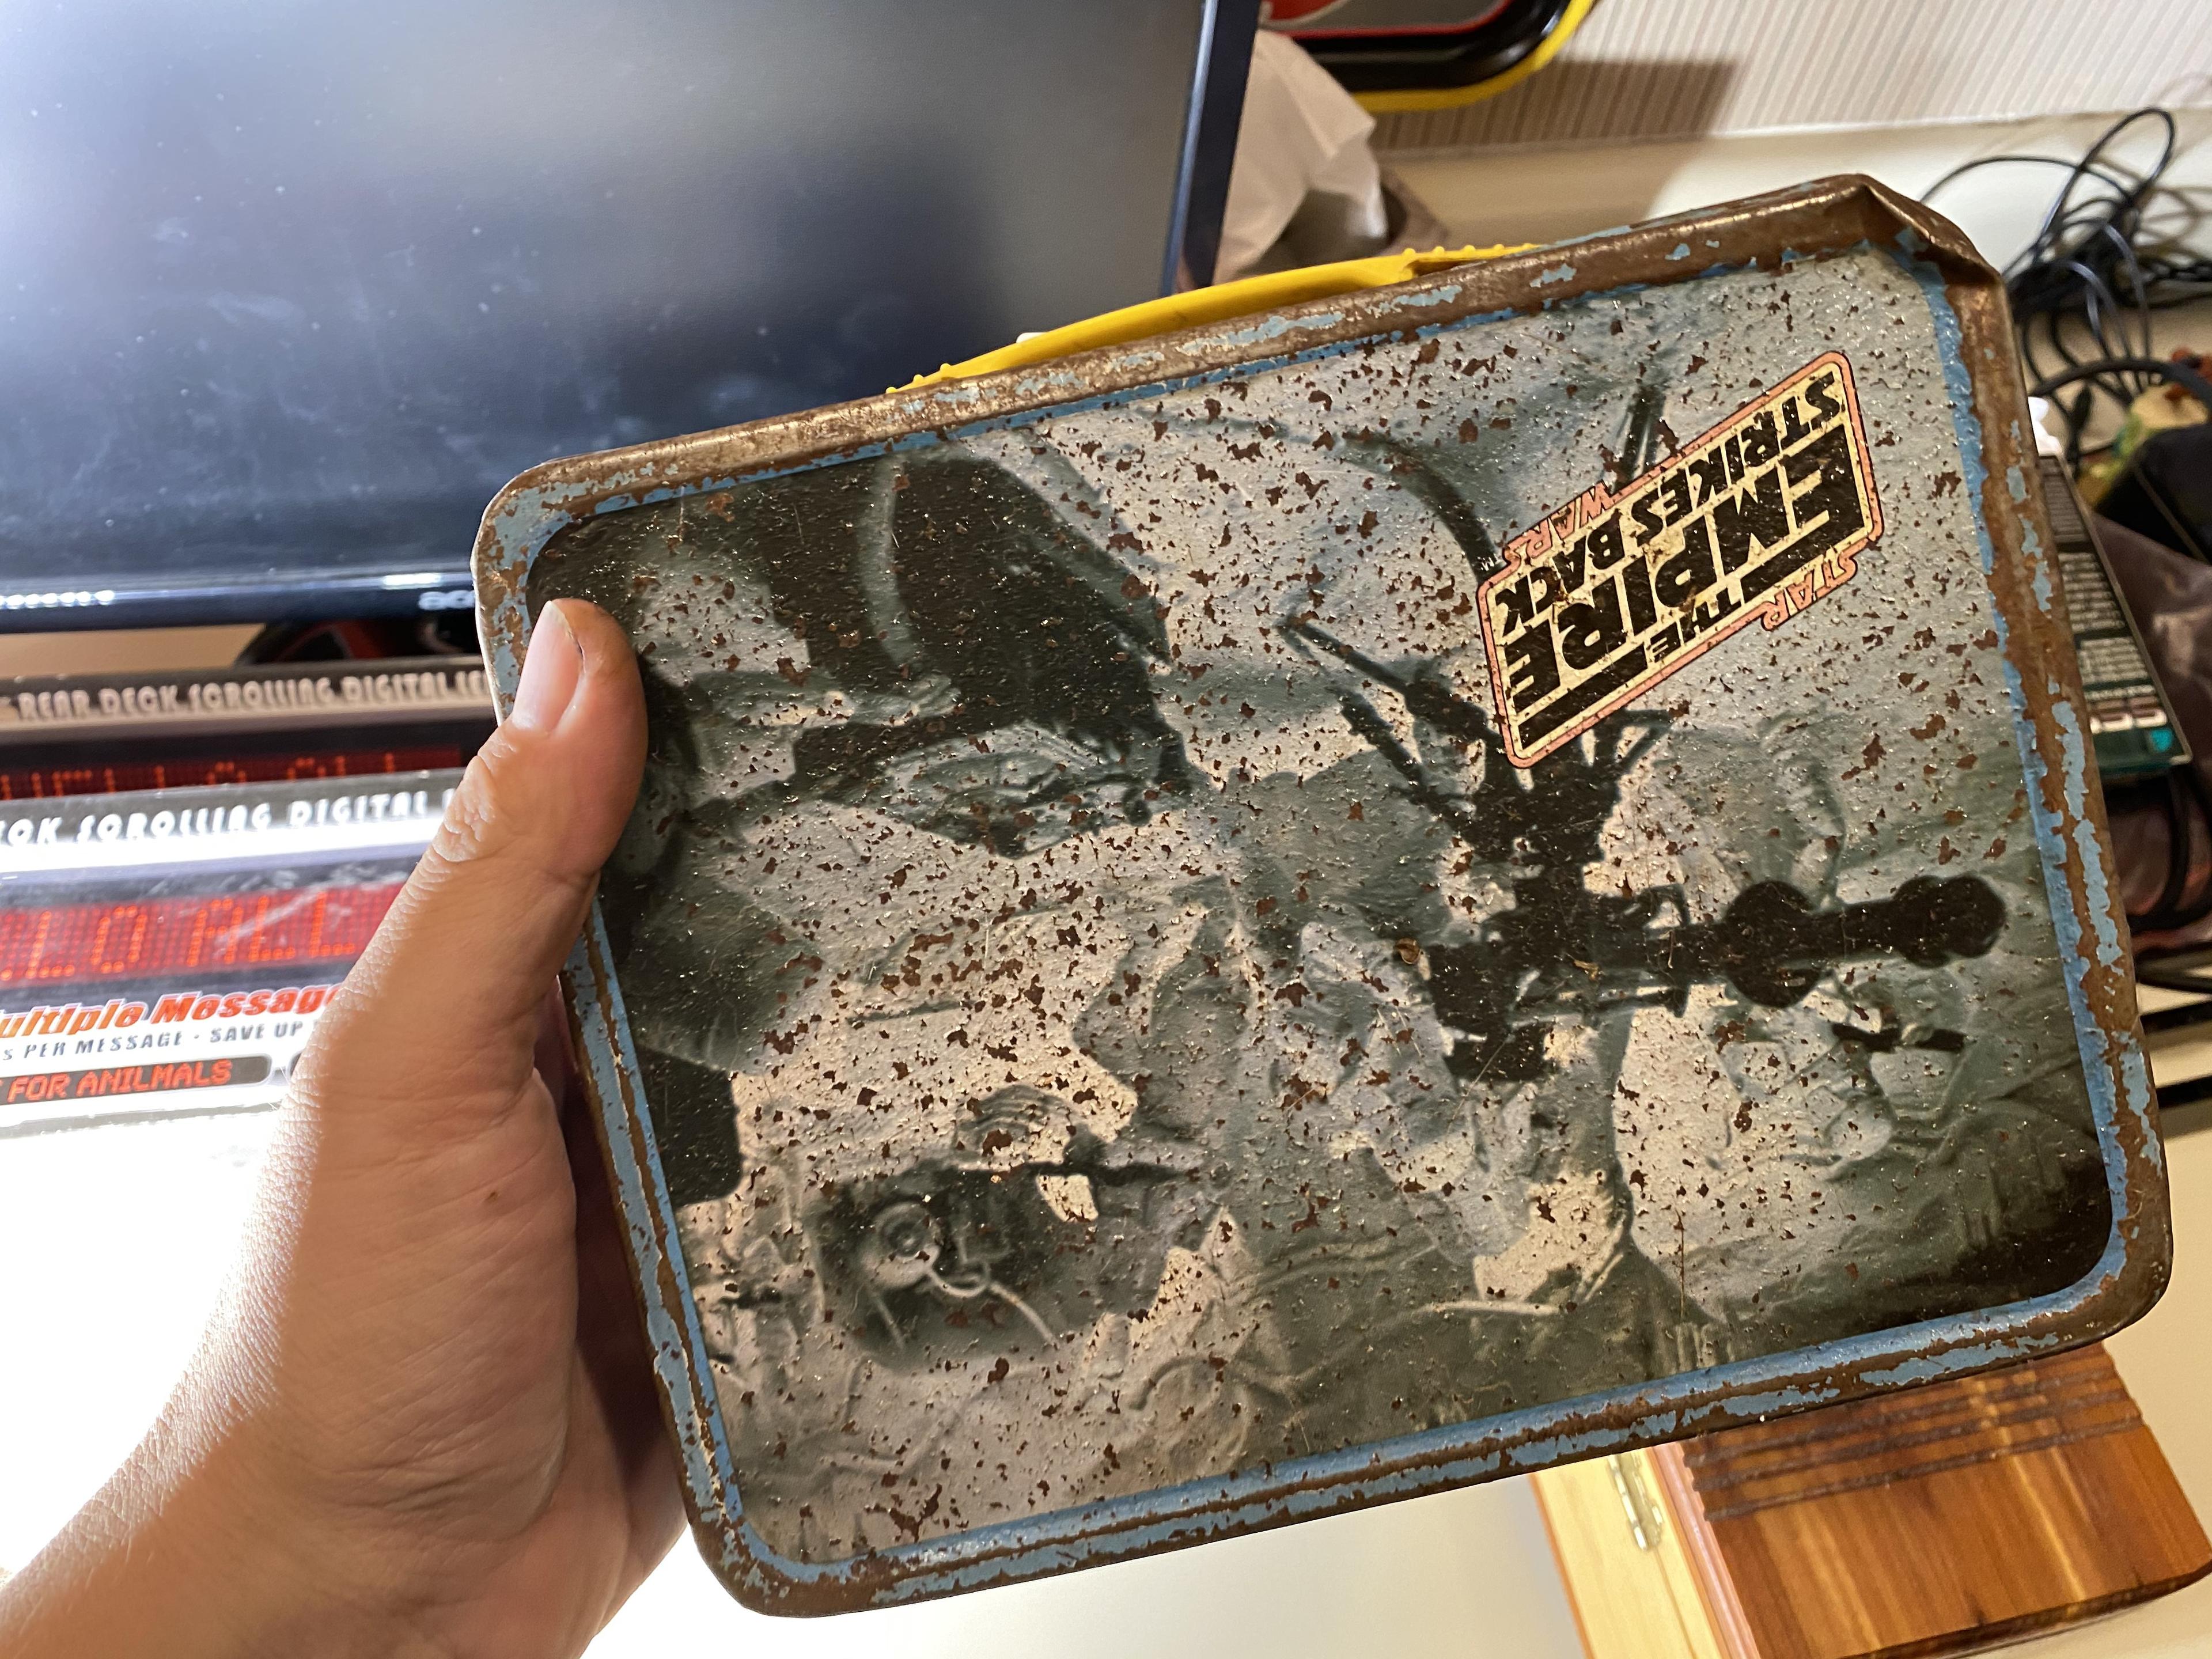 Vintage Empire Strikes Back Lunchbox